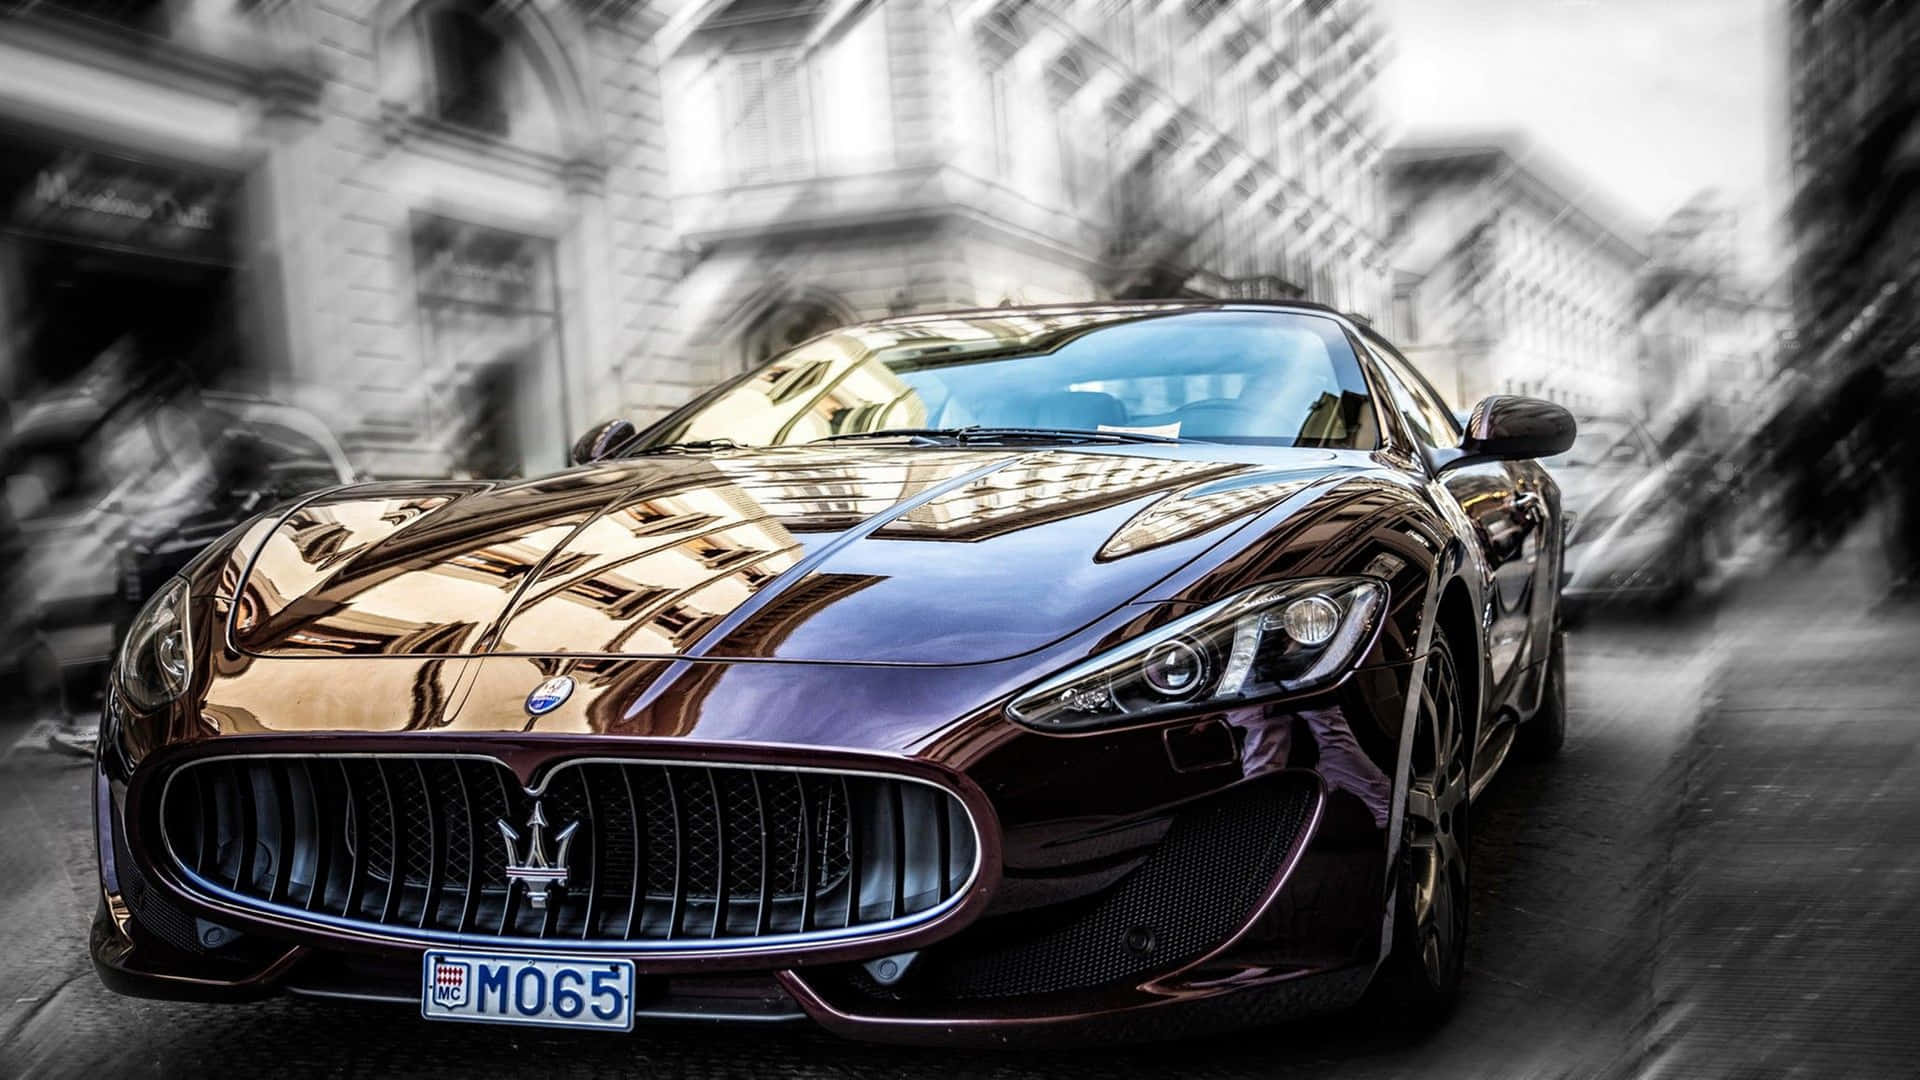 Maserati 4000 X 2250 Wallpaper